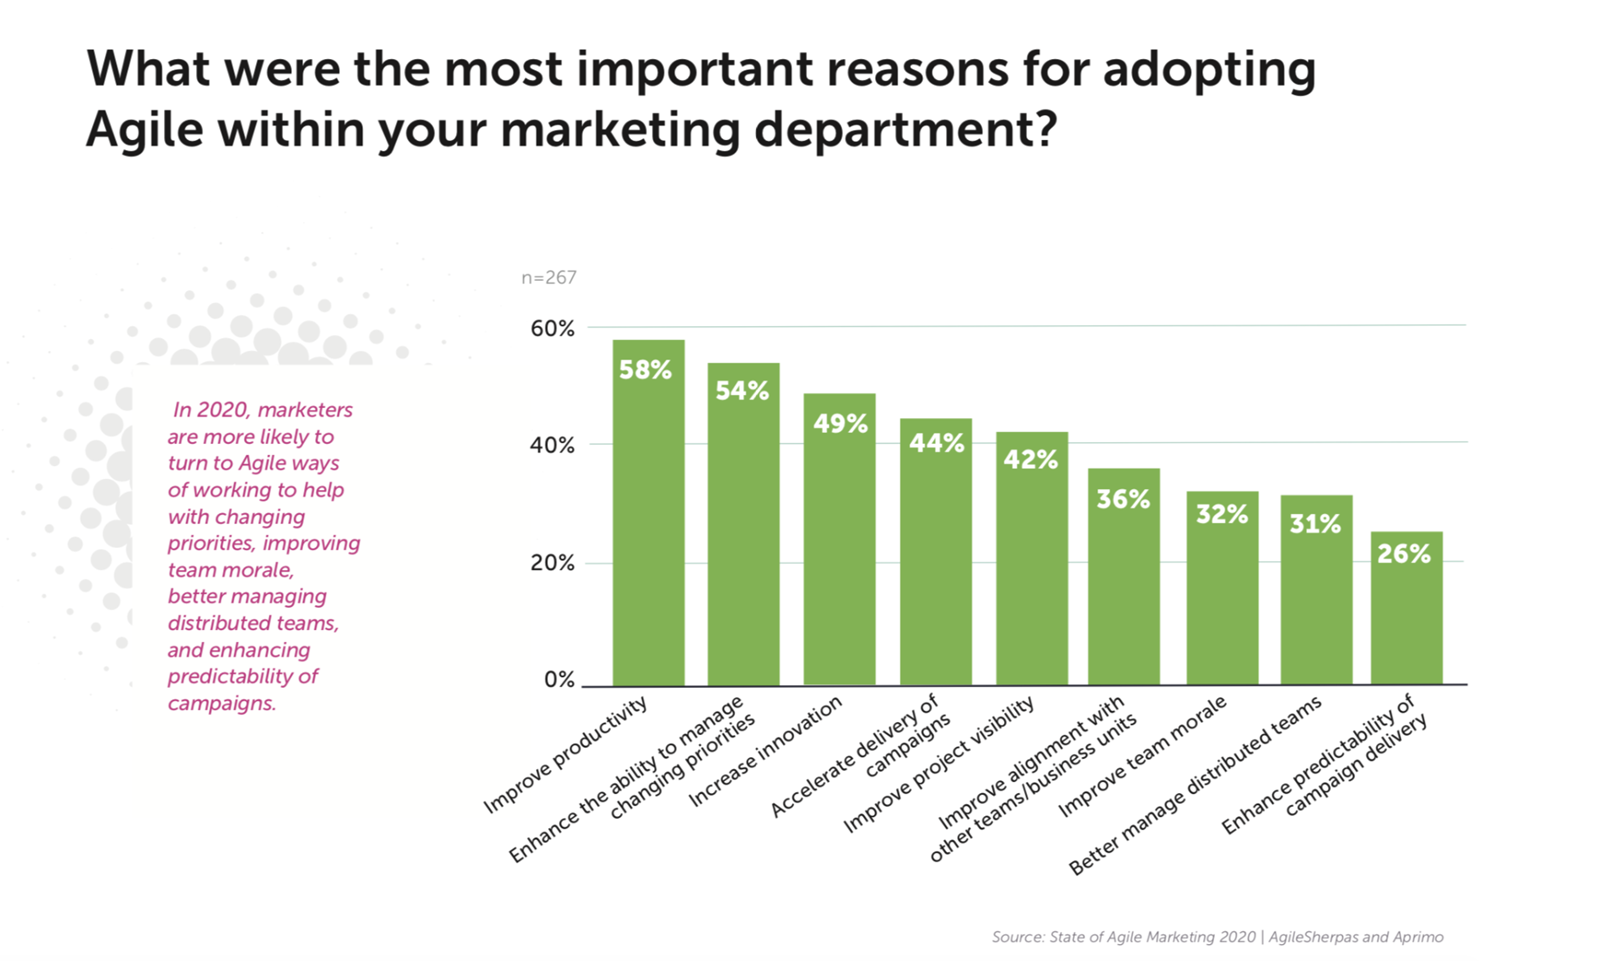 Reasons for adopting agile marketing 2020